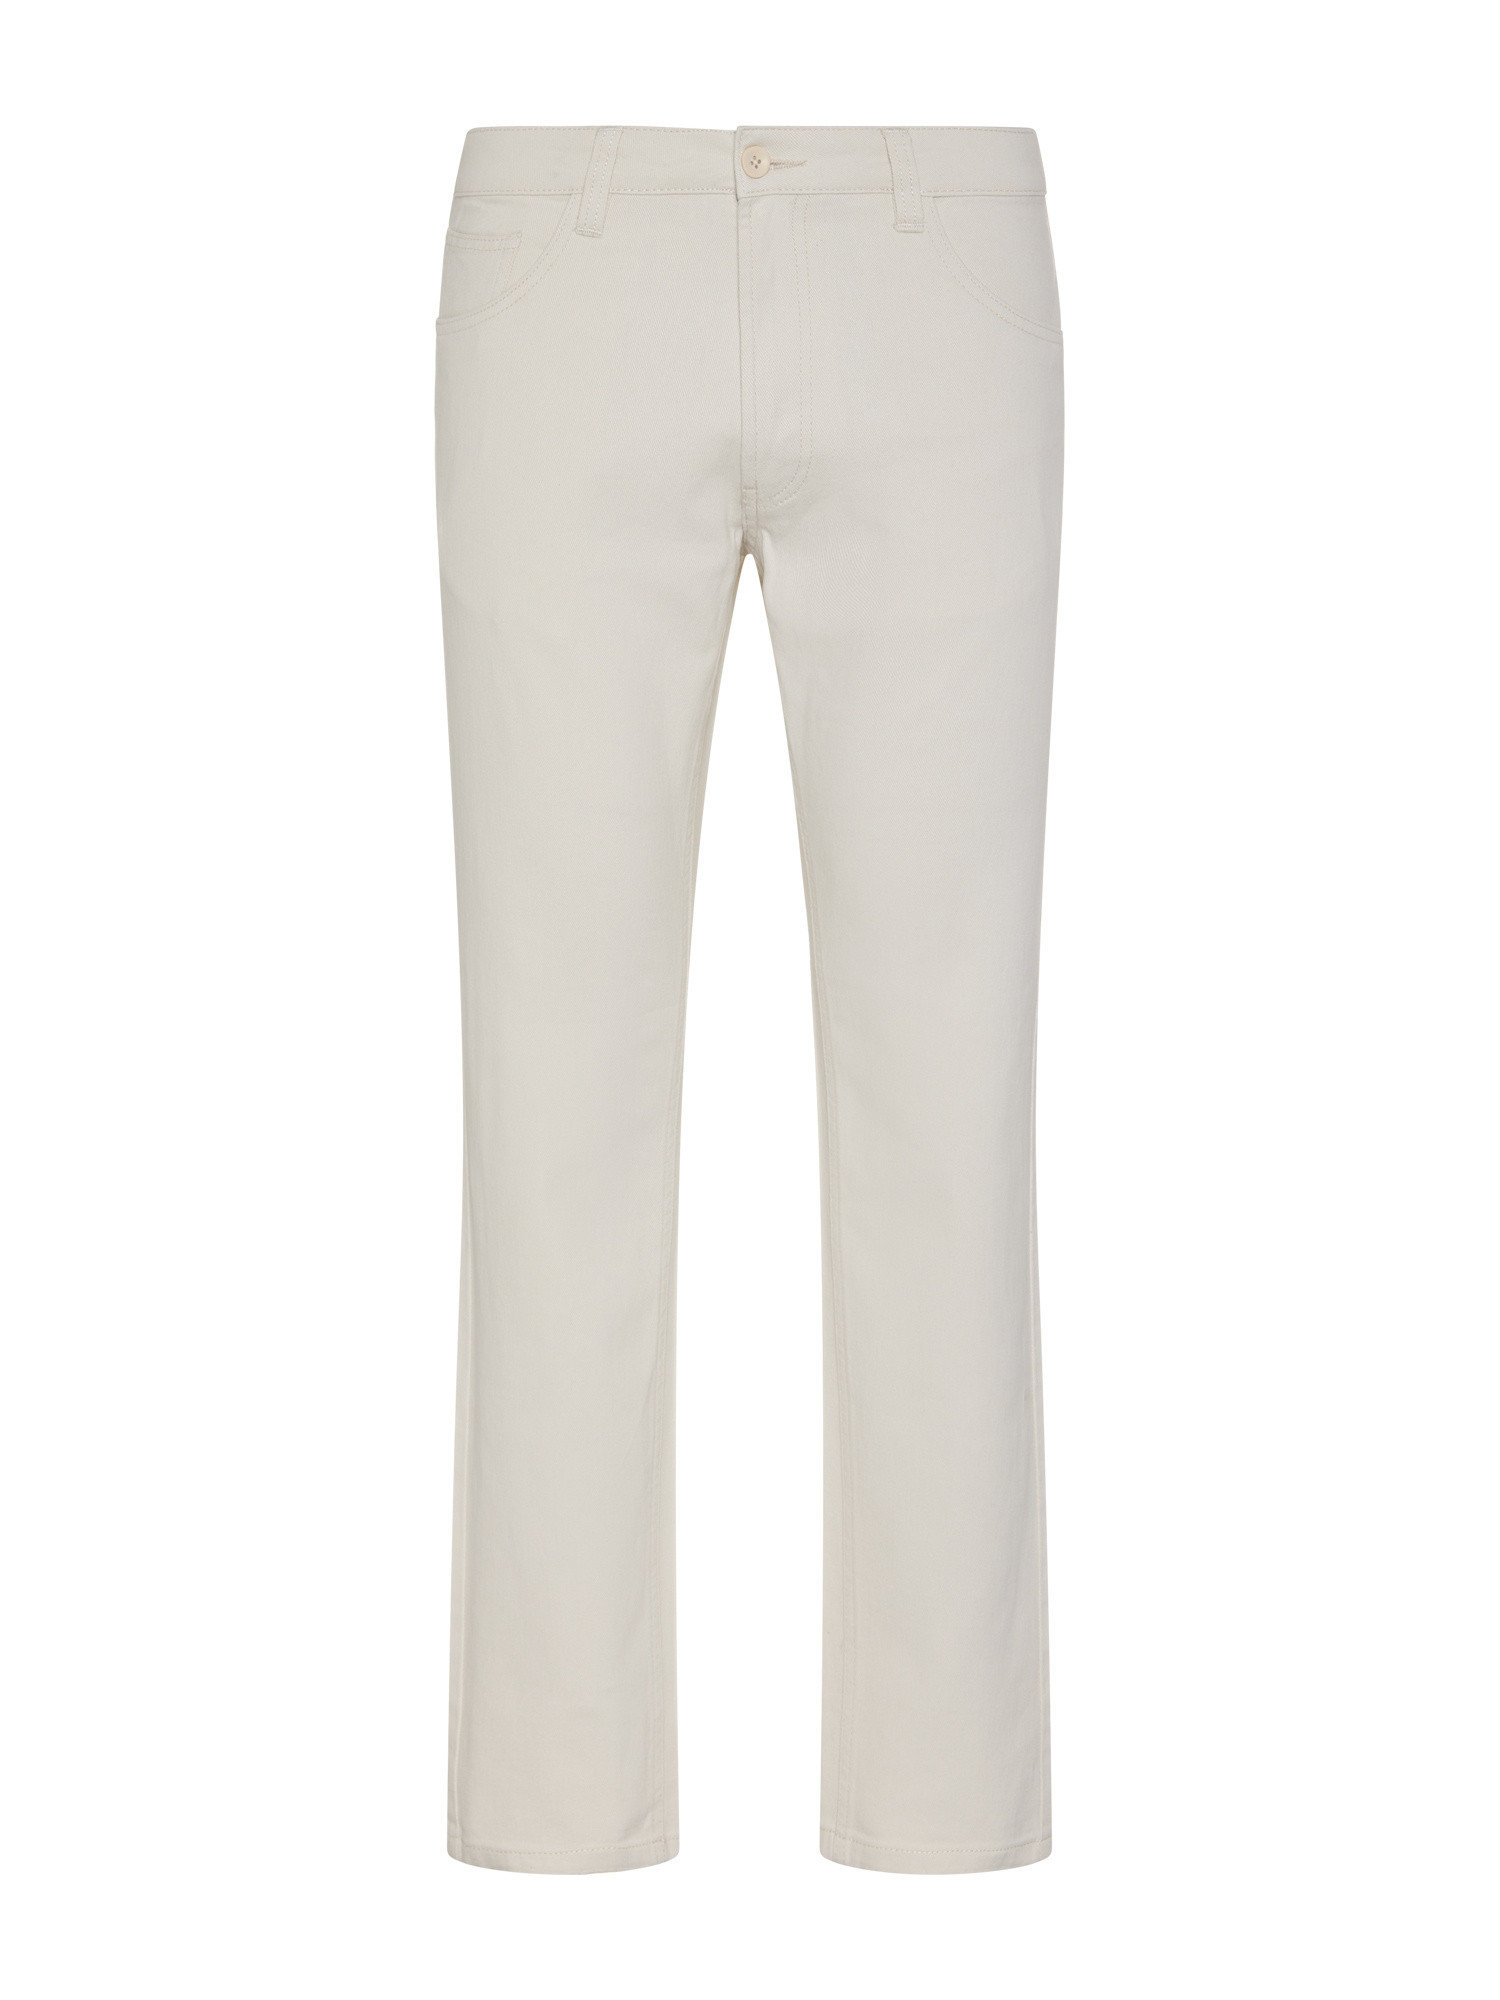 JCT - Pantaloni regular fit cinque tasche in puro cotone, Bianco panna, large image number 0